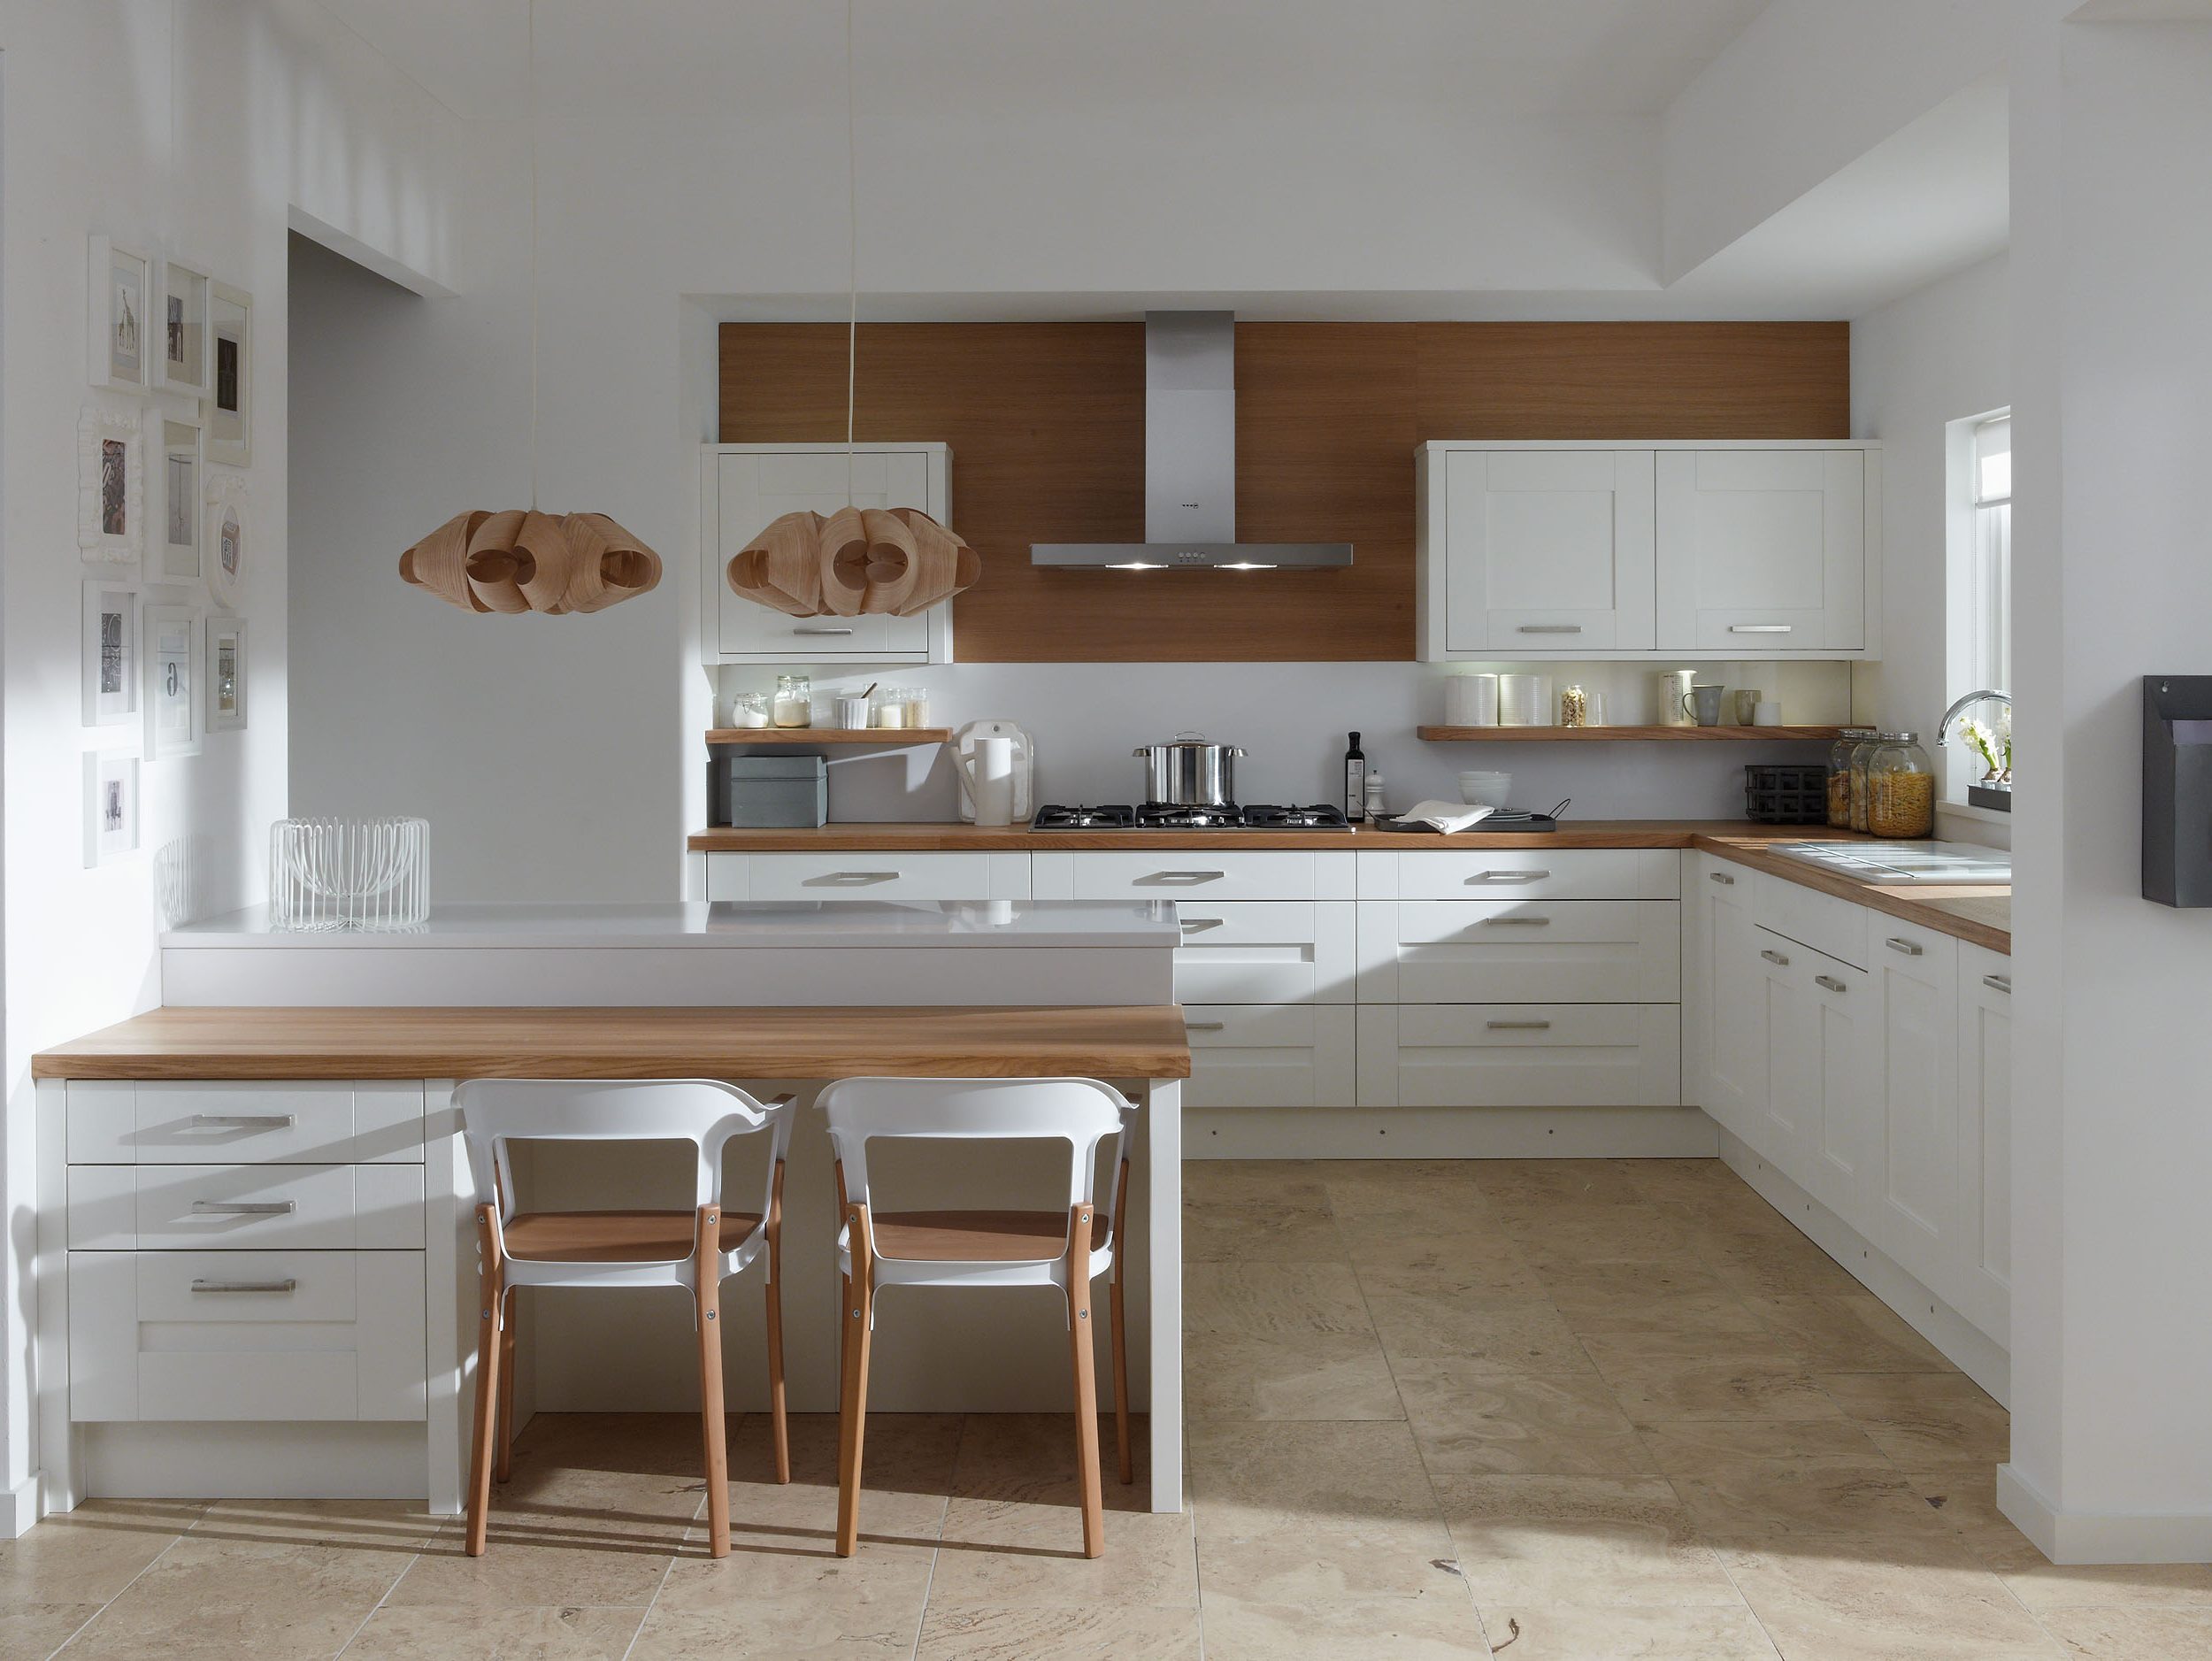 White Kitchen Interior with Wooden Countertop photo - 7